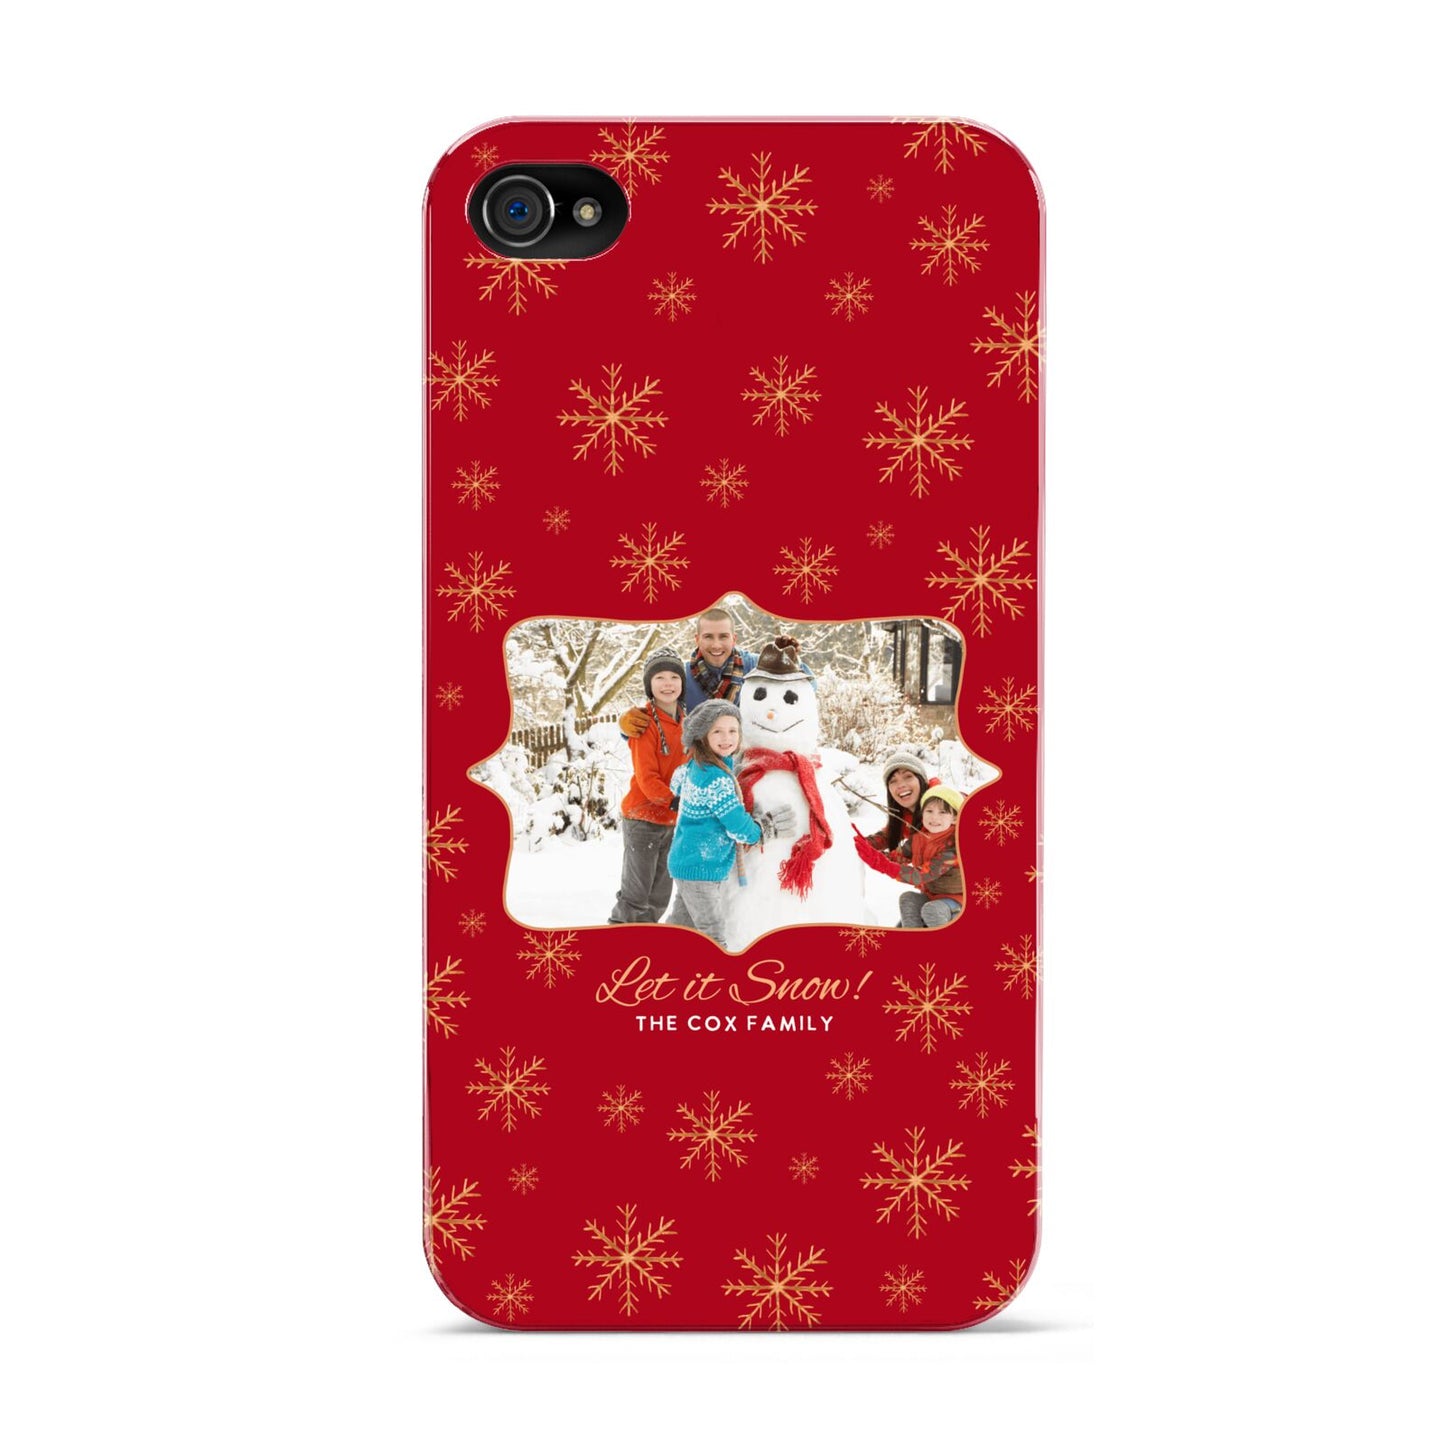 Let it Snow Christmas Photo Upload Apple iPhone 4s Case